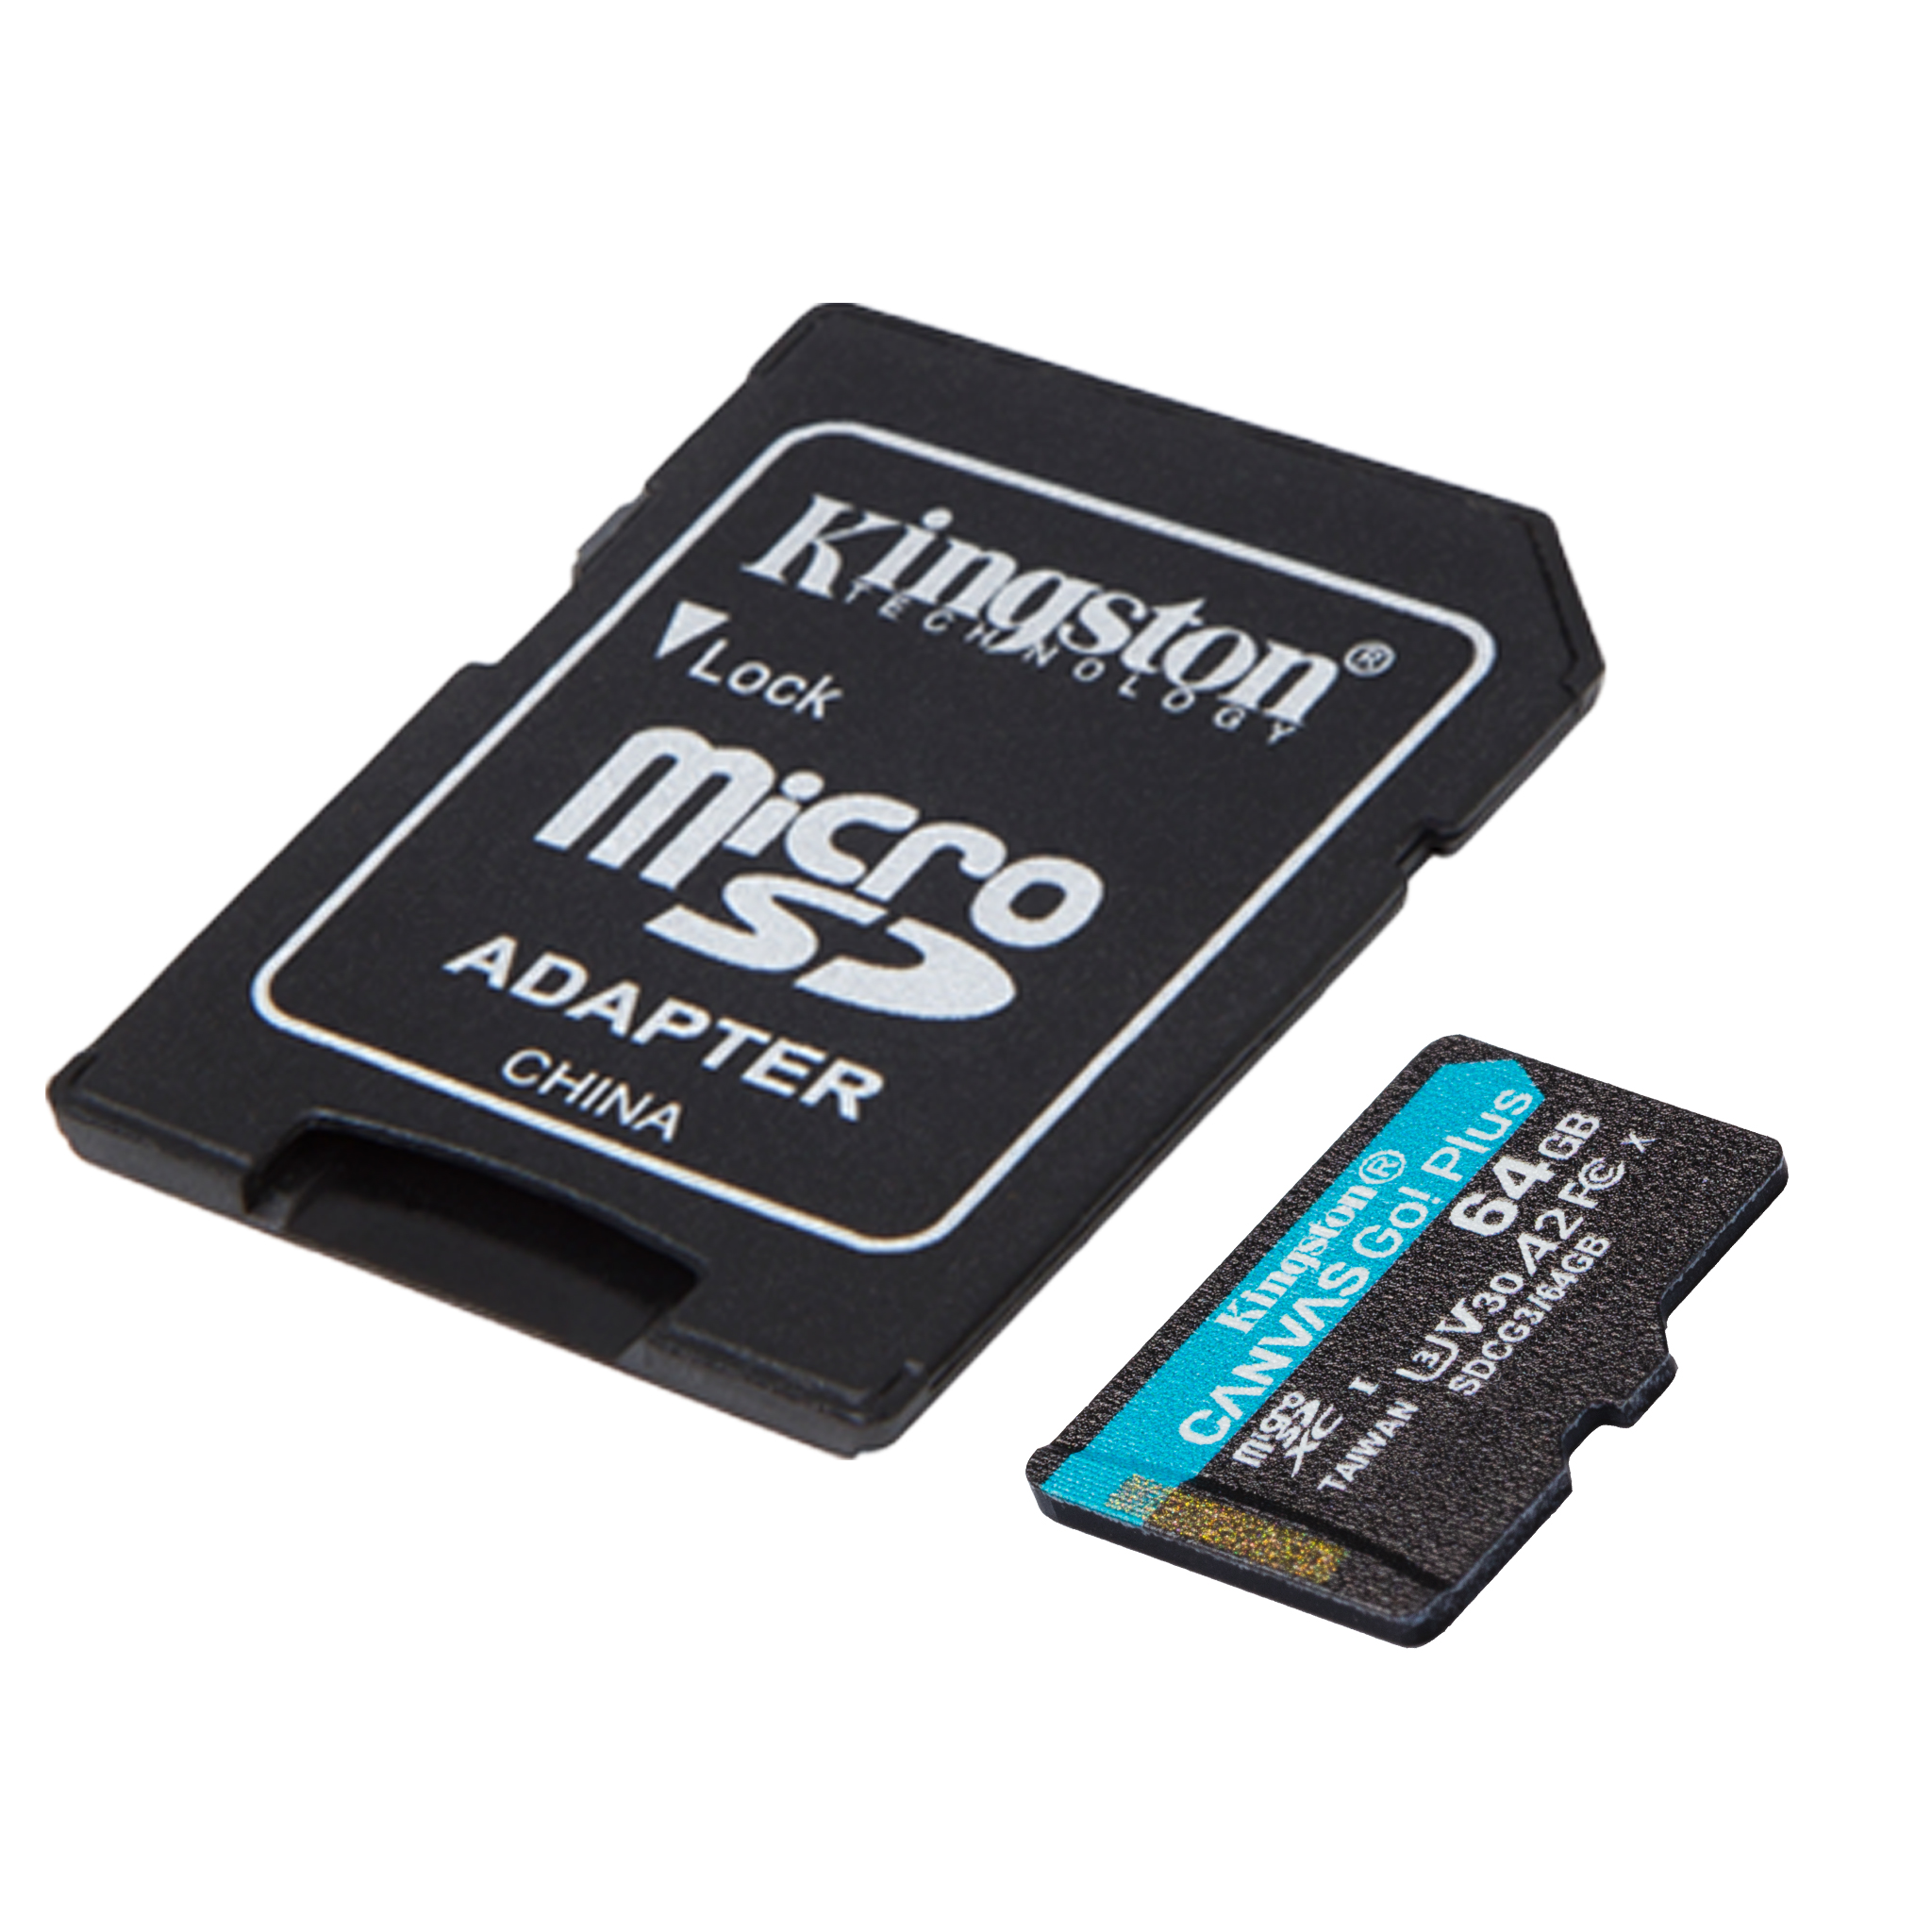 Kingston 256GB microSDXC Canvas Go Plus 170MB/s Read UHS-I A2/A1 Memory Card U3 Adapter SDCG3/256GB C10 V30